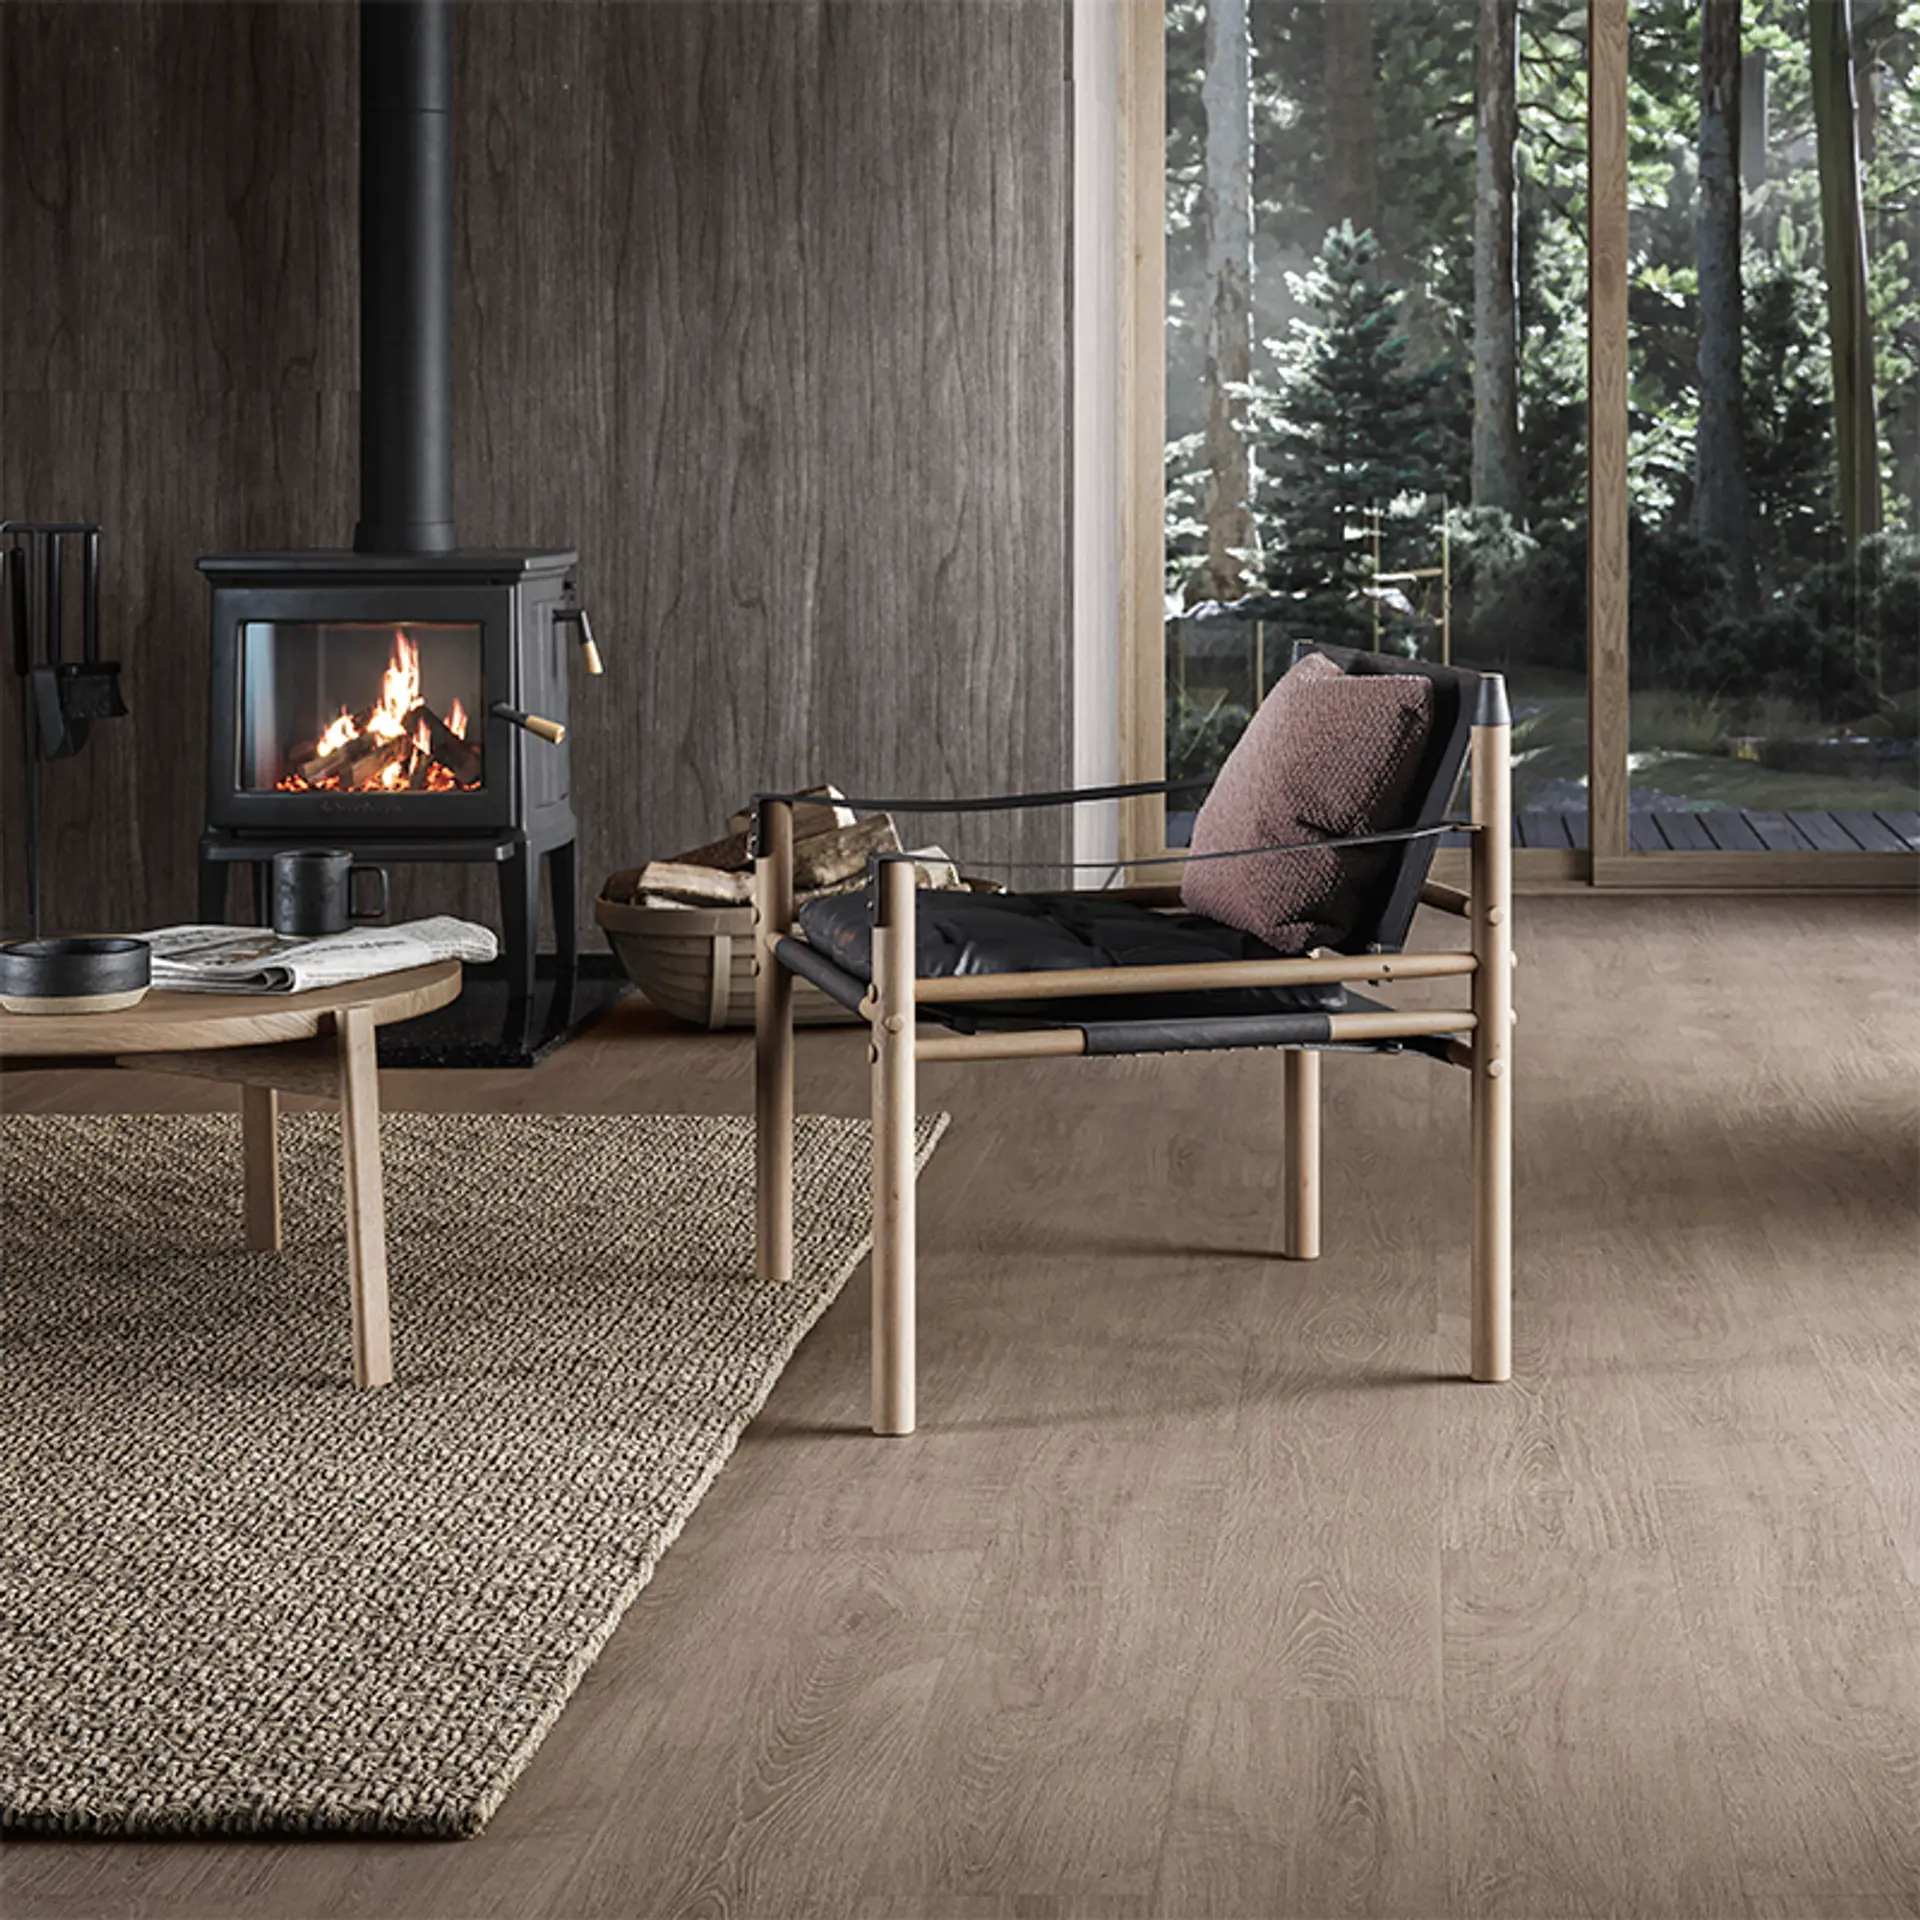 moderne hytte med mørkt gulv og møbler i skandinavisk design